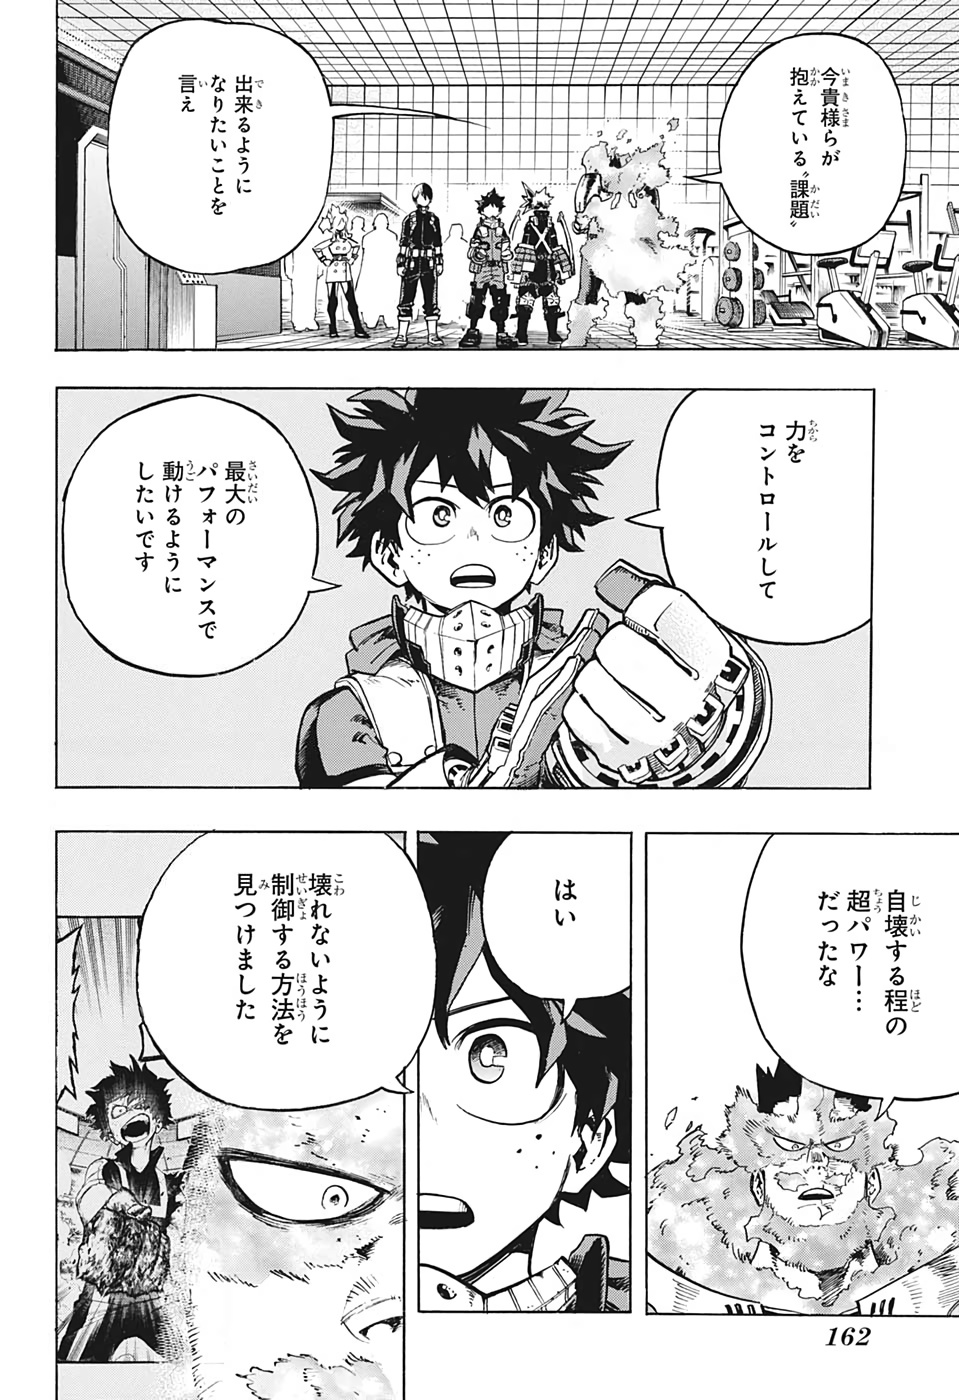 Boku no Hero Academia - Chapter 247 - Page 2